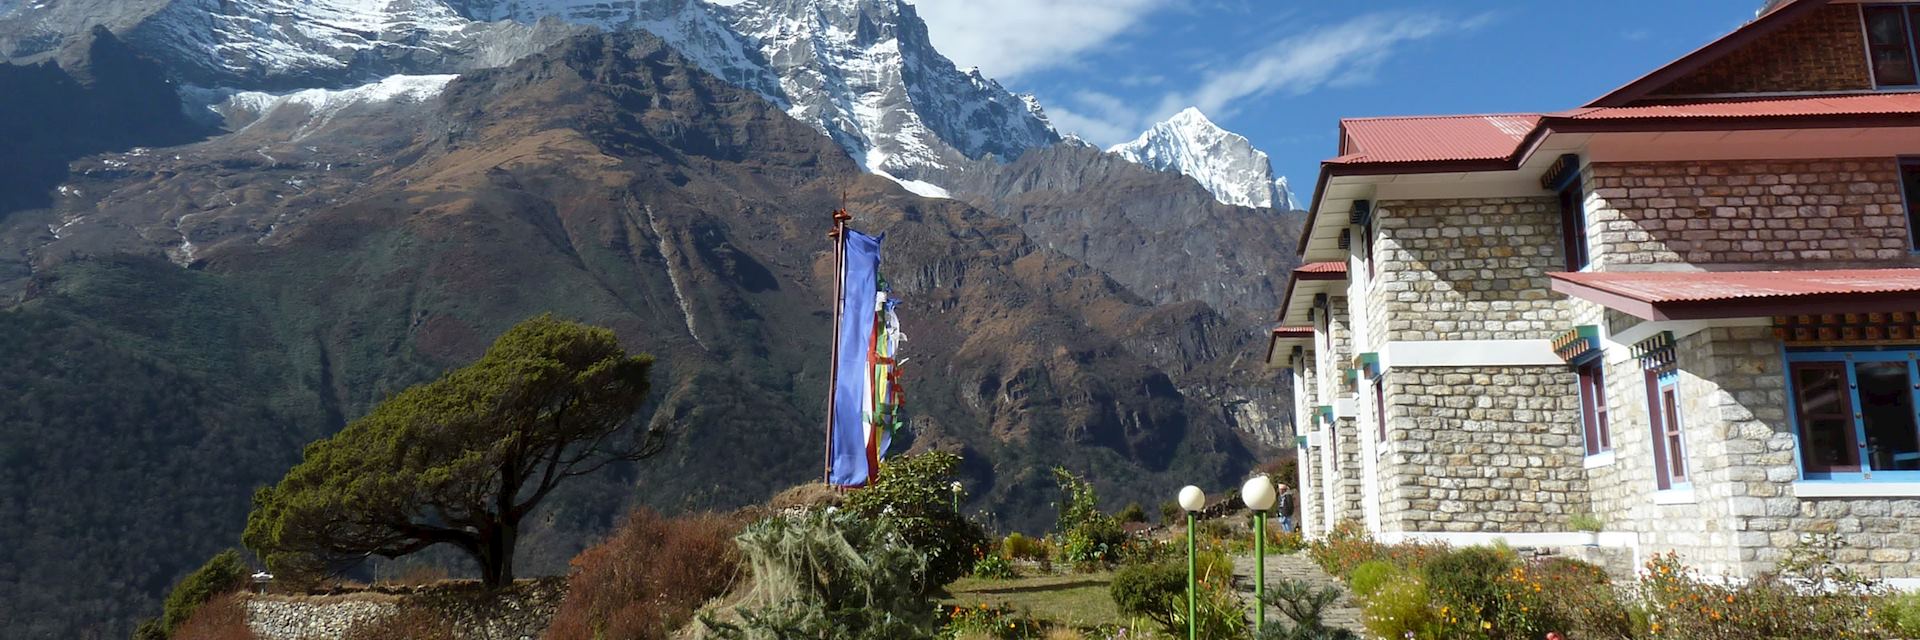 Everest Summit Lodge Mende, Mende